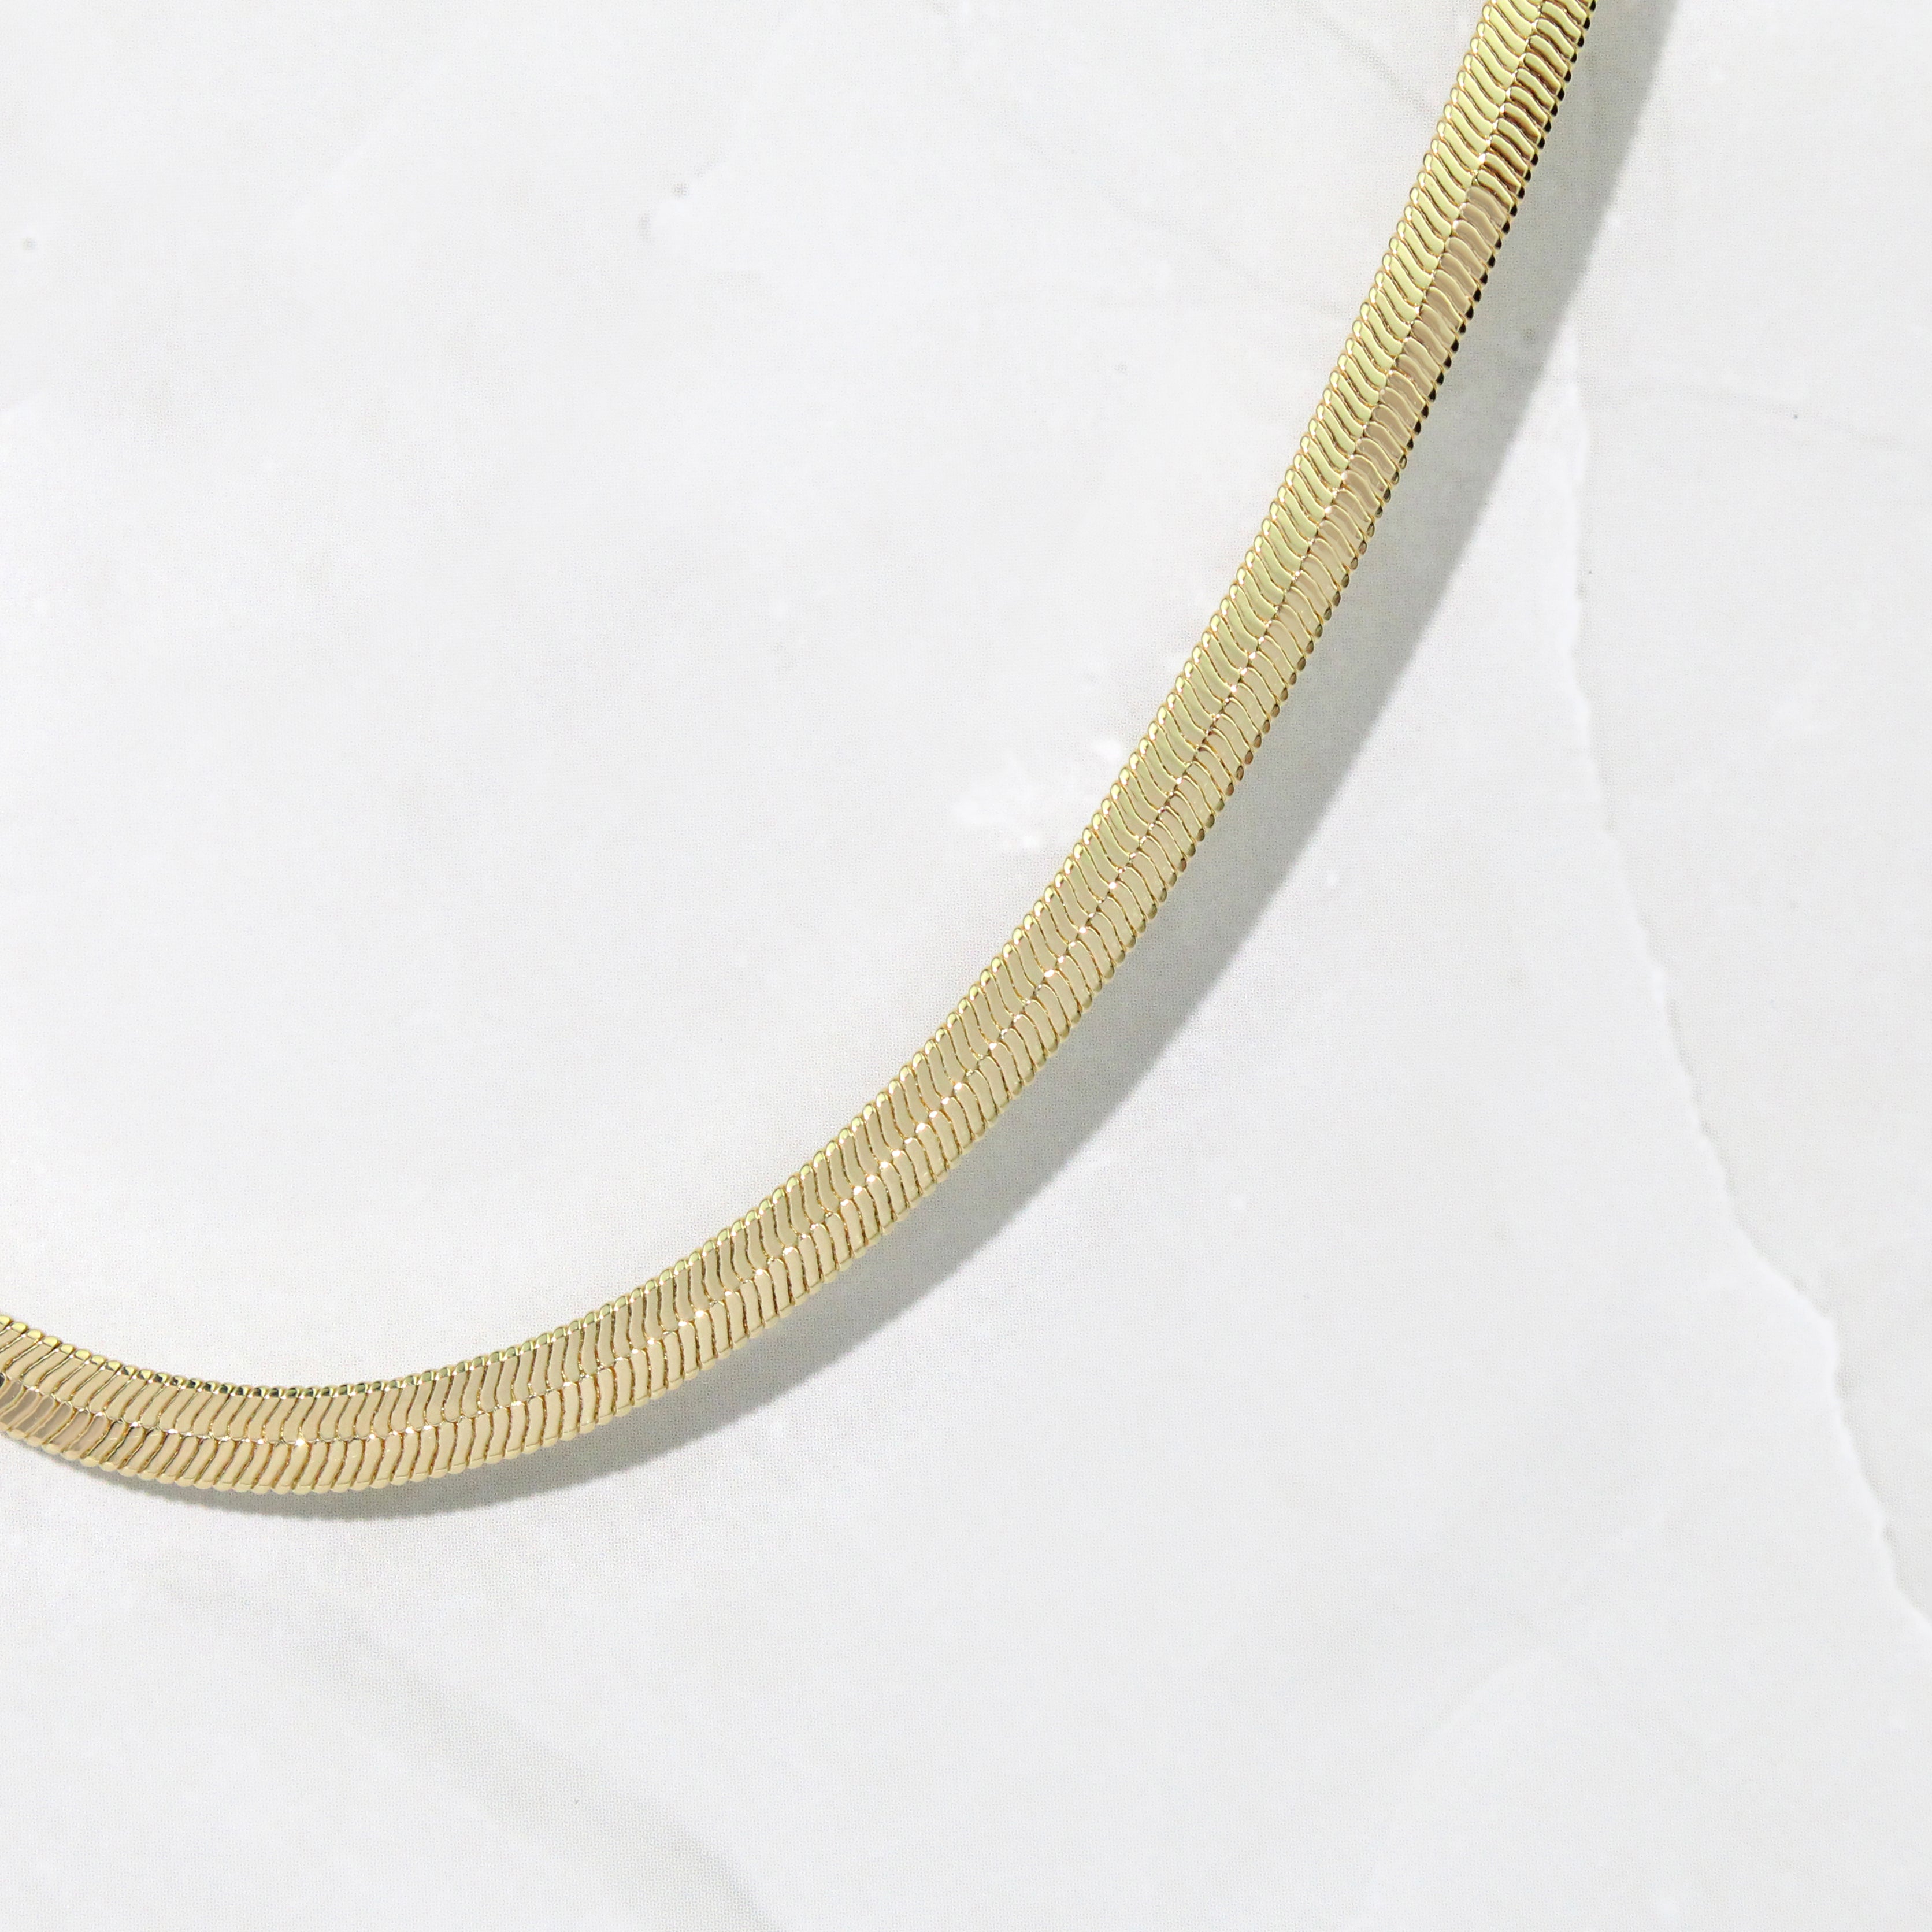 Six Strand Herringbone Necklace Tri Tone 9ct Gold Ladies 375 9.2g Eq3 | eBay